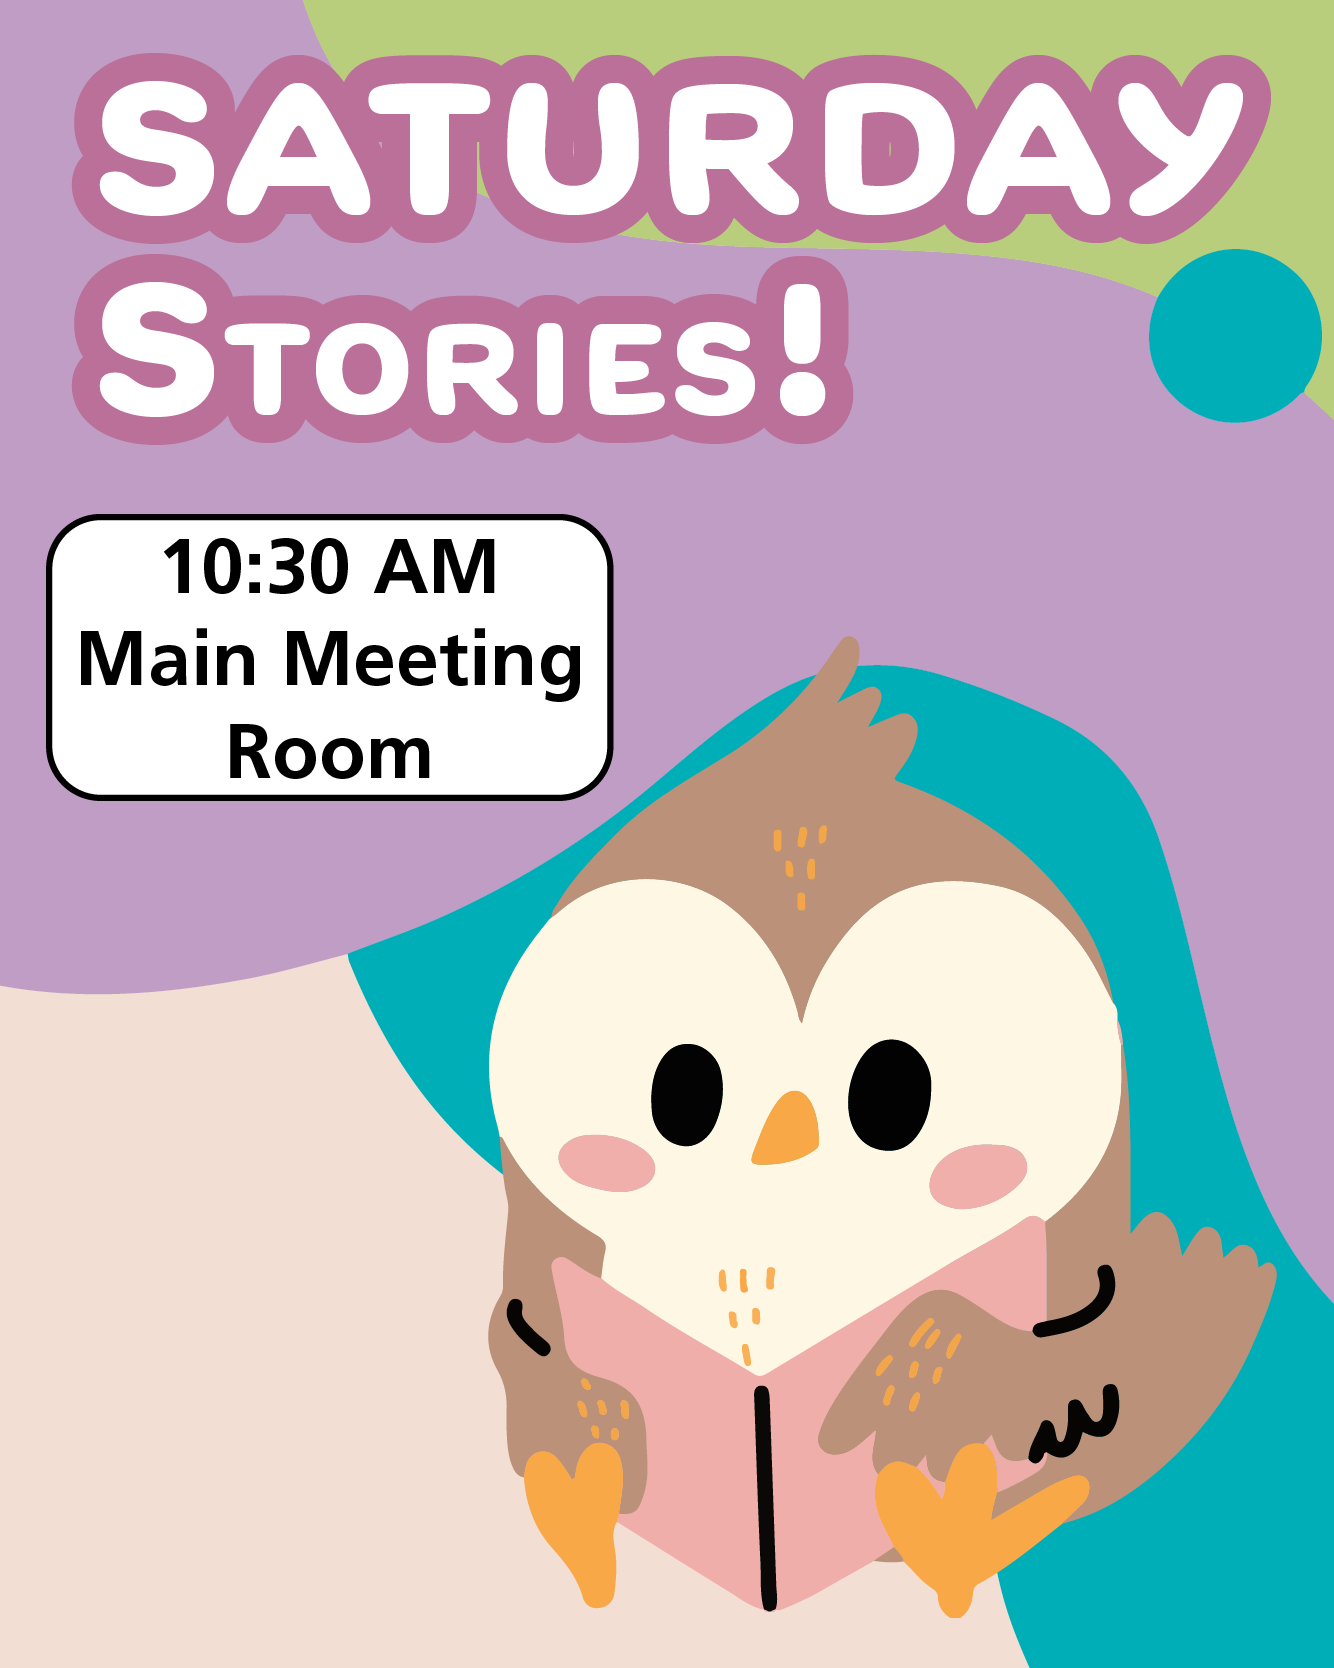 Saturday Stories!  10:30 AM Main Meeting Room